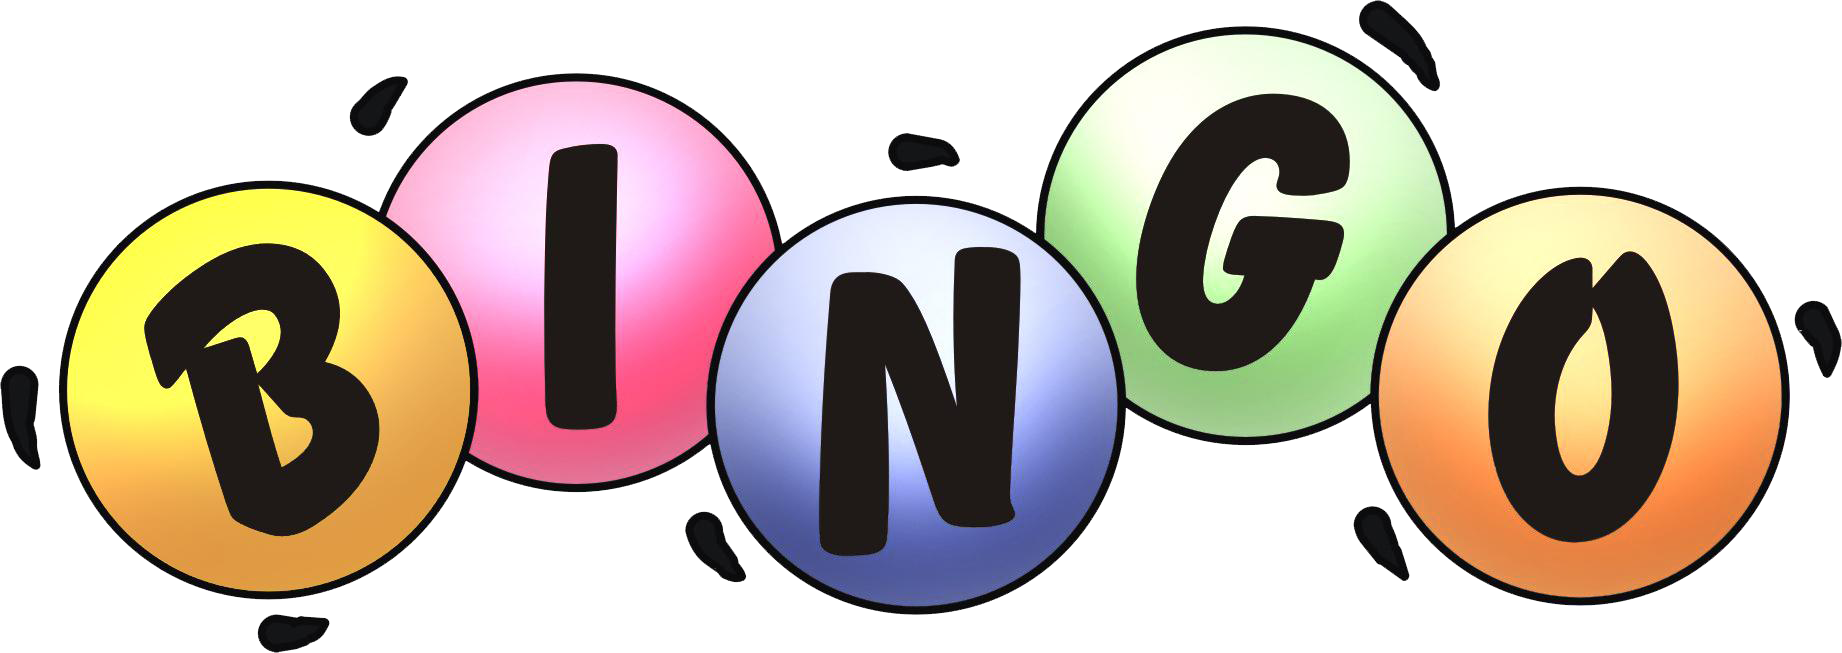 Colorful Bingo Balls Graphic PNG